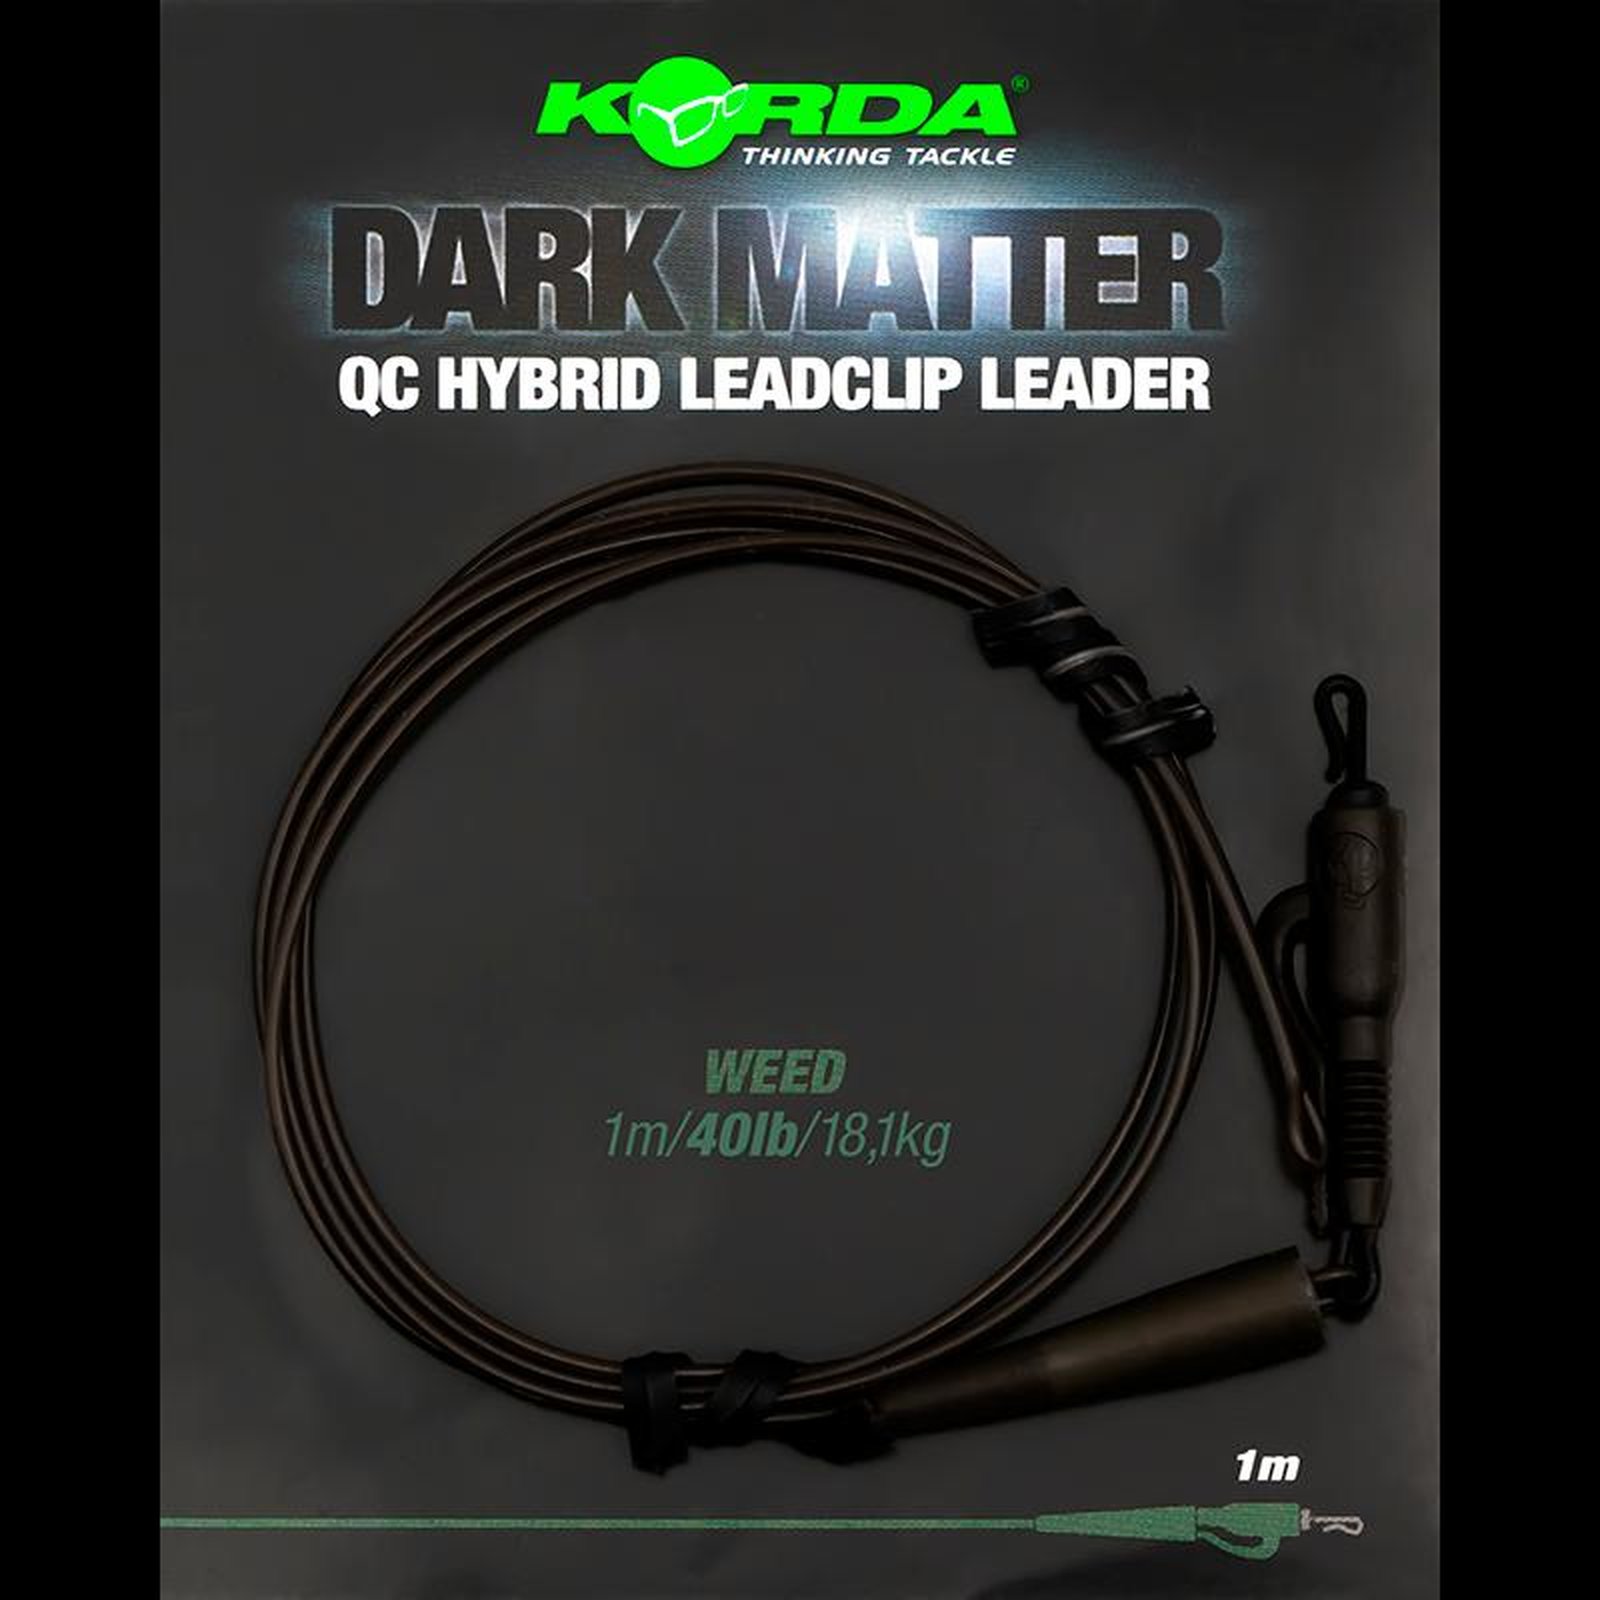 Korda Dark Matter QC Hybrid Leadclip Leader Weed 1 Stk. 1,00m